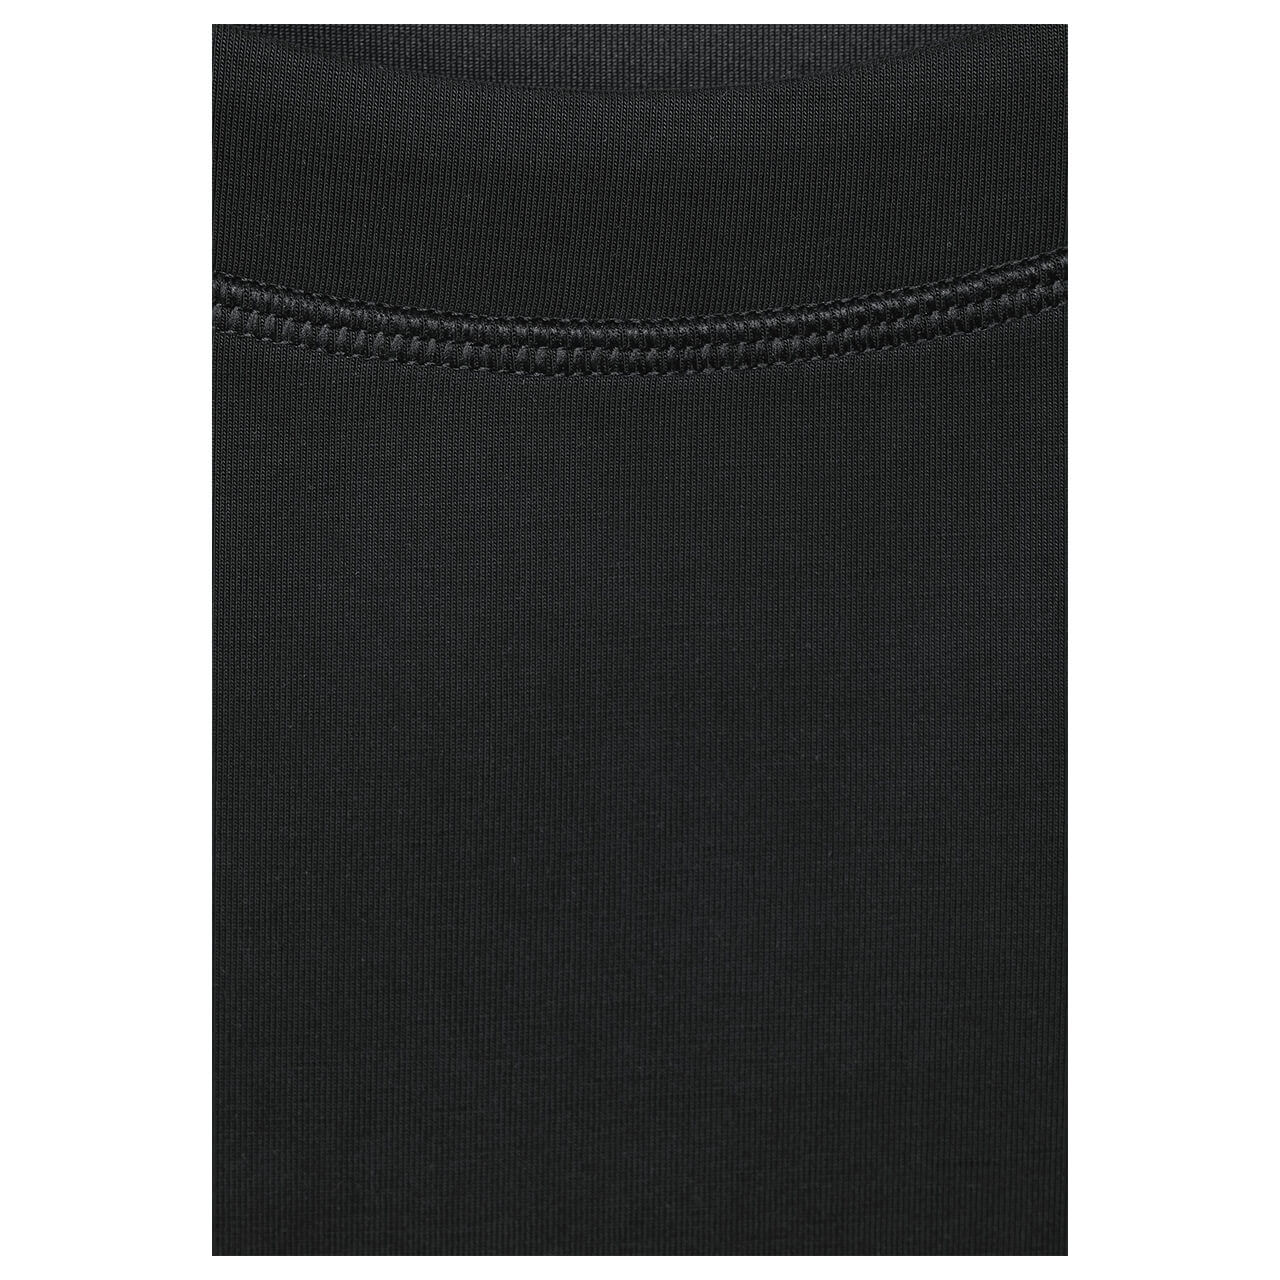 Cecil Damen Kurzarm Sweatshirt black